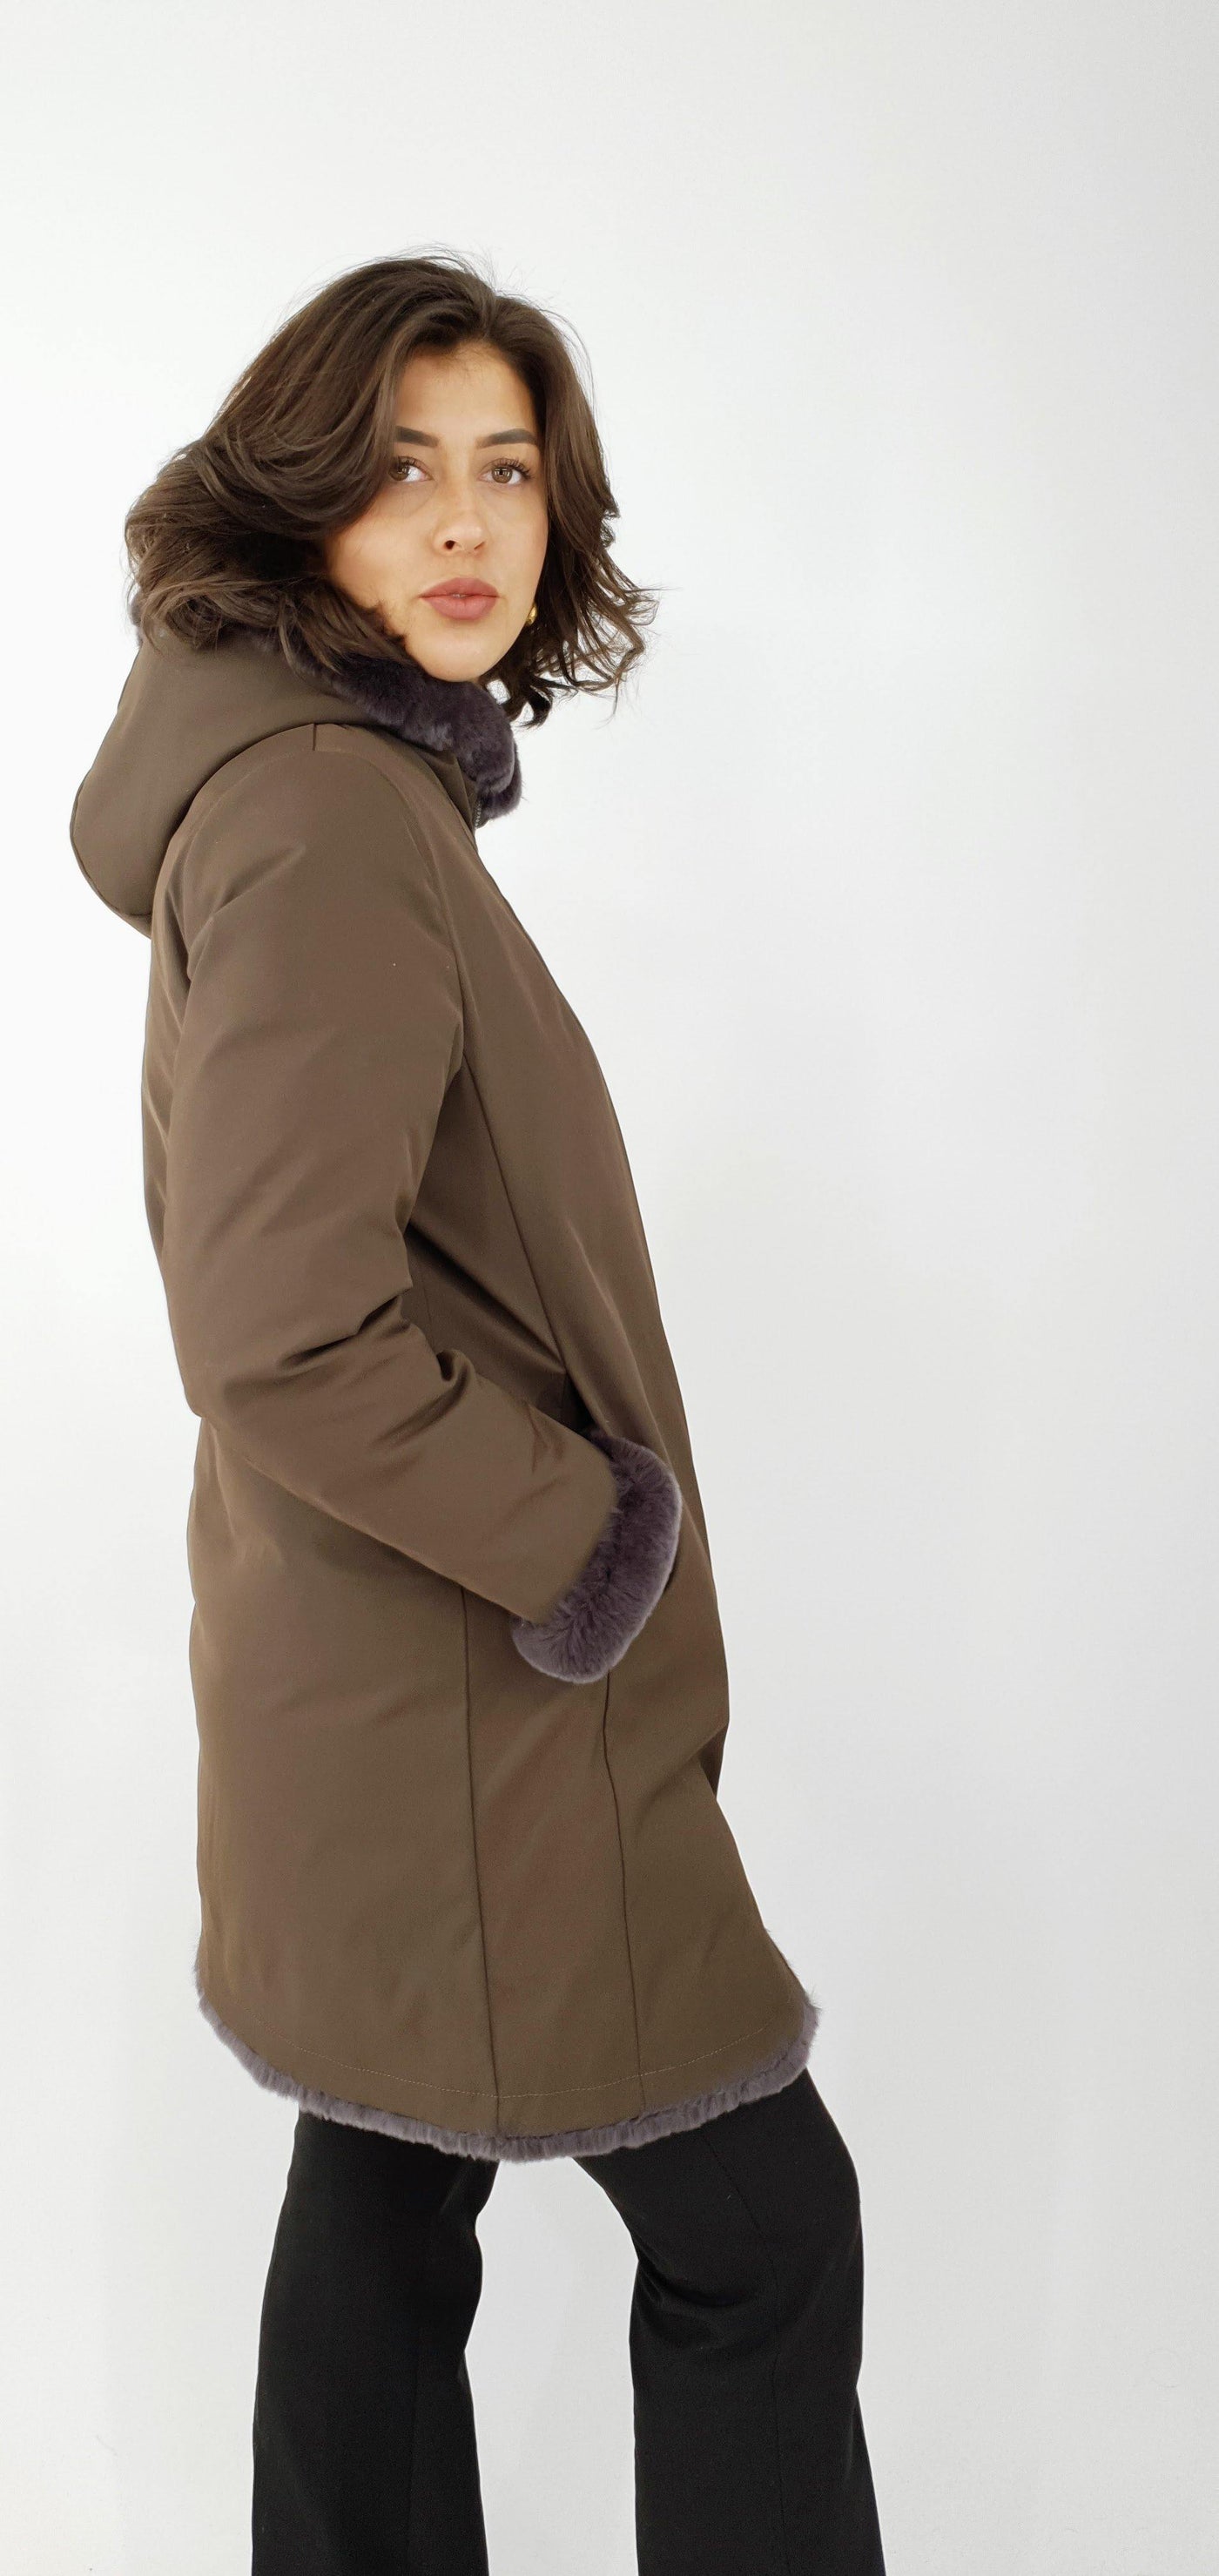 Danila, 90 cm. - Hood - Textile - Women - Chocolate - Textile - Women - Danila, 90 cm. - Hood - Textile - Women - Chocolate - Stampe Pels